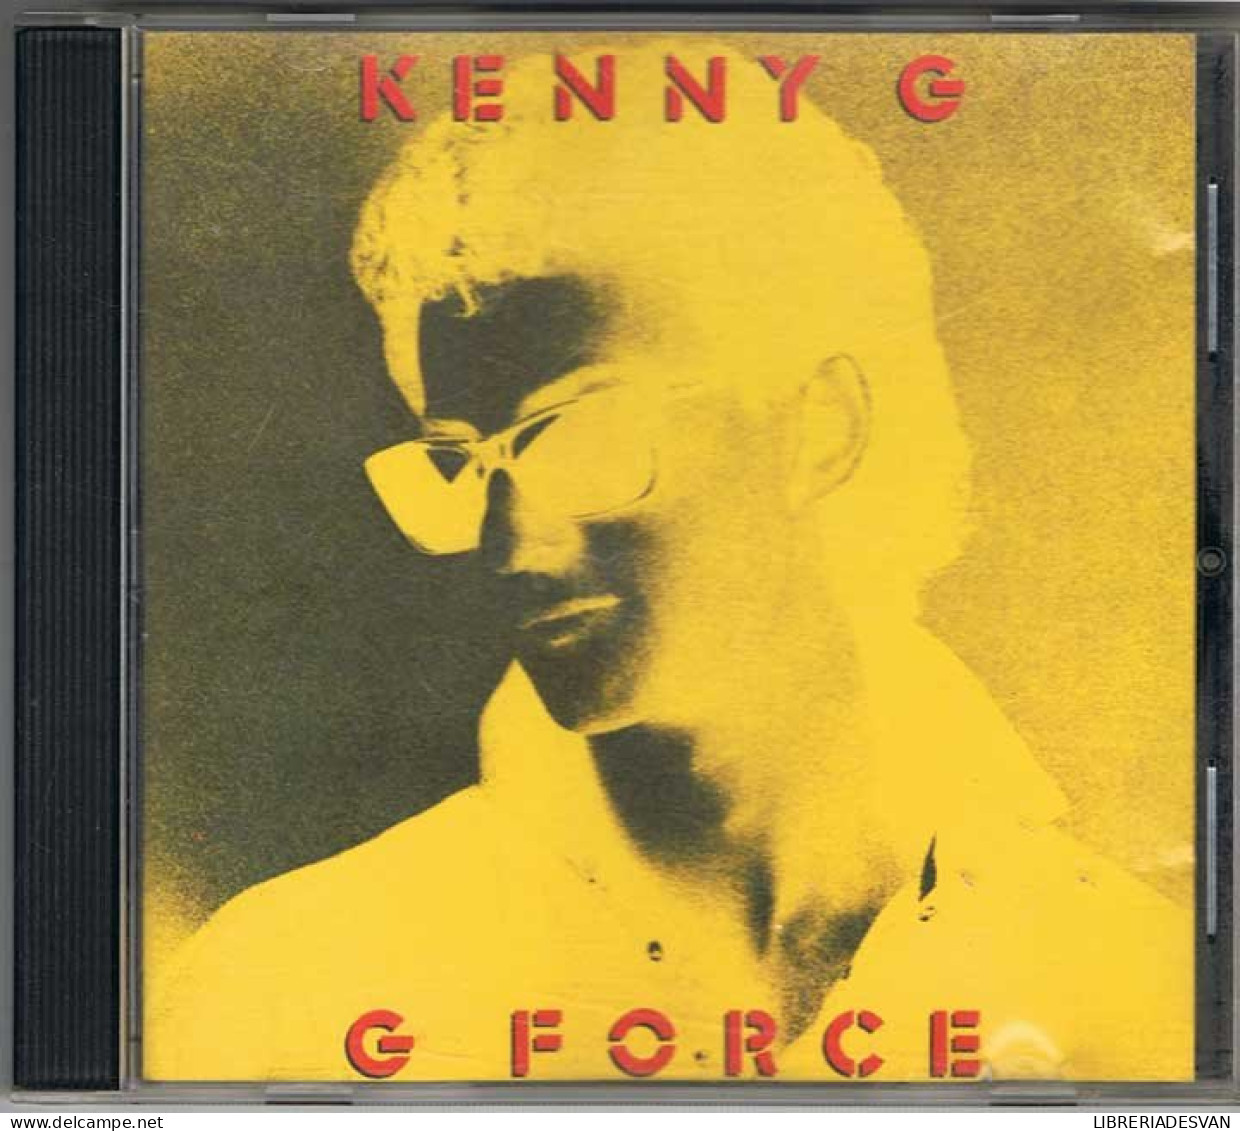 Kenny G - G Force. CD - Jazz